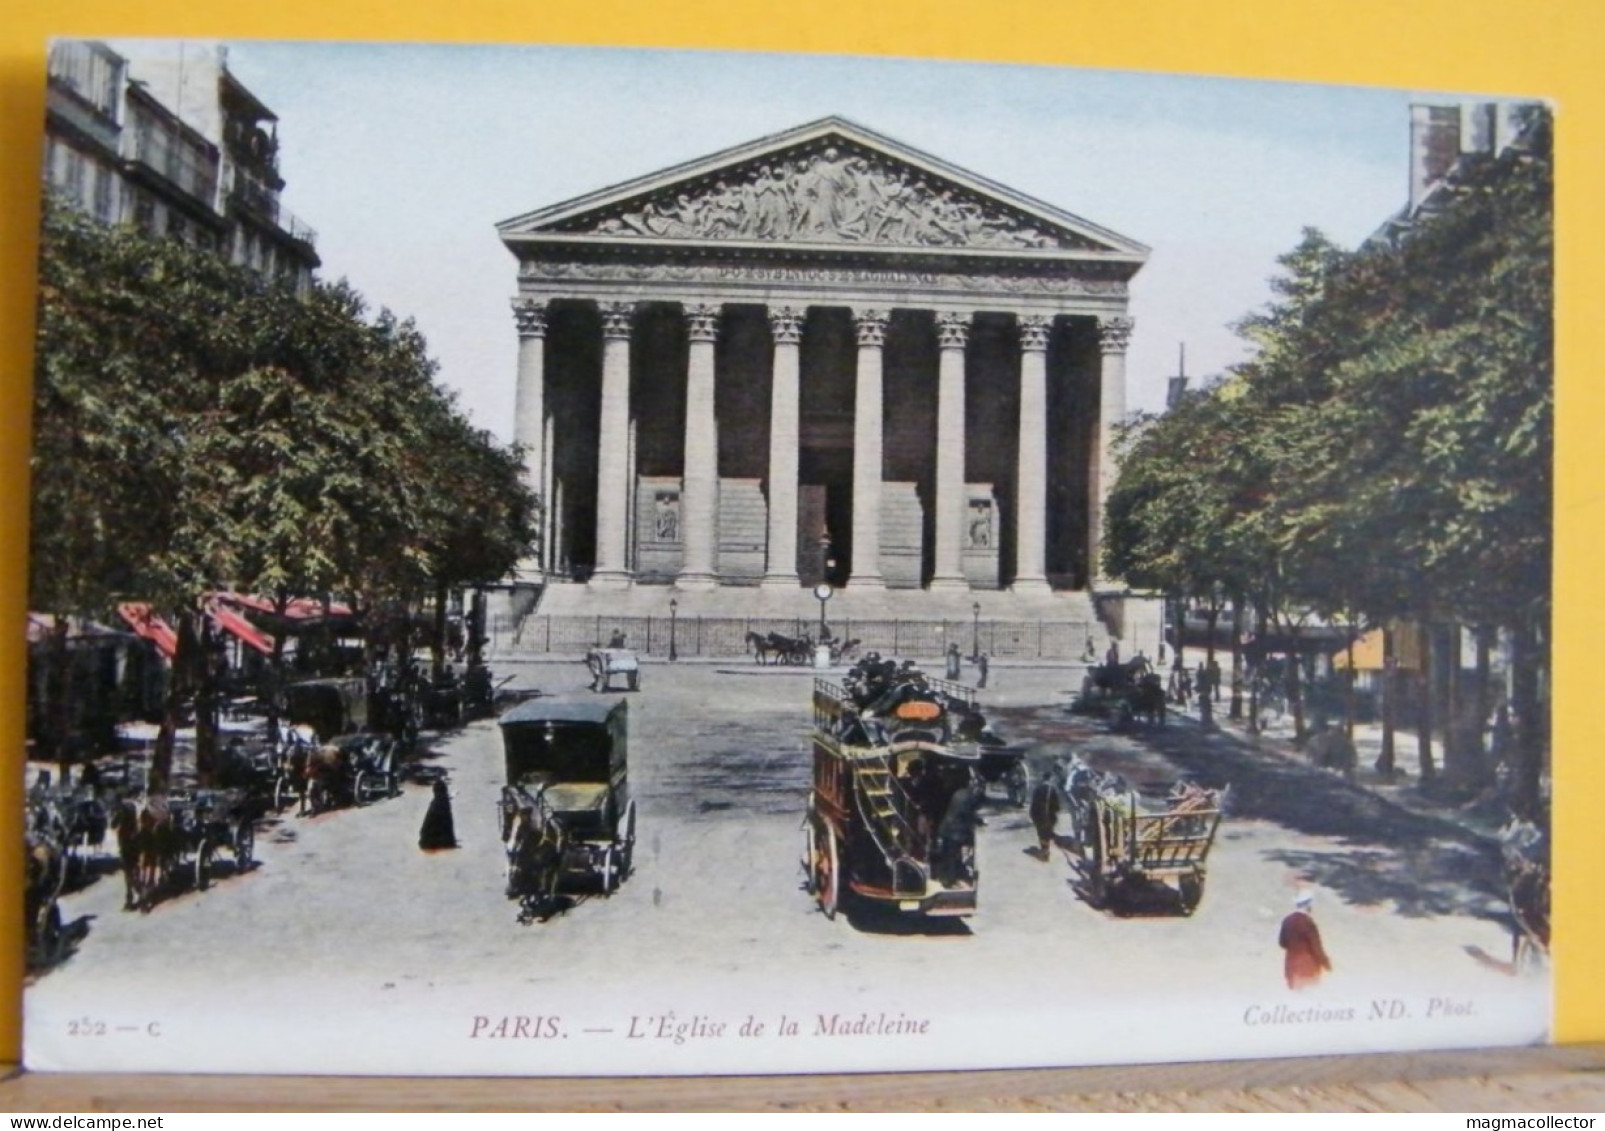 (P1) PARIGI / PARIS - L'EGLISE DE LA MADELEINE - 252-C - NON VIAGGIATA 1910/20ca - Kirchen